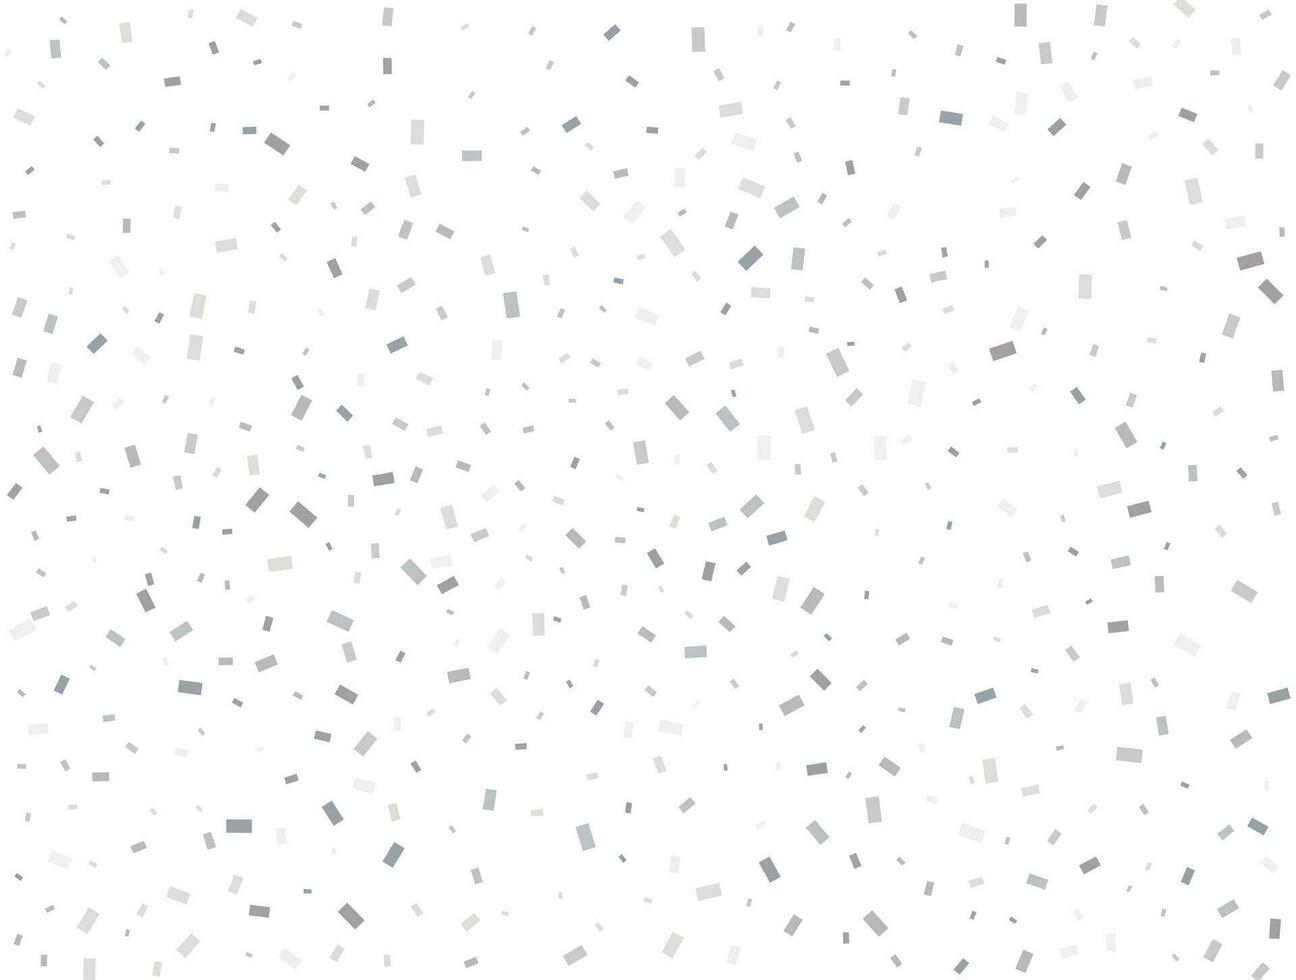 Luxury silver Rectangular glitter confetti background. White festive texture. vector